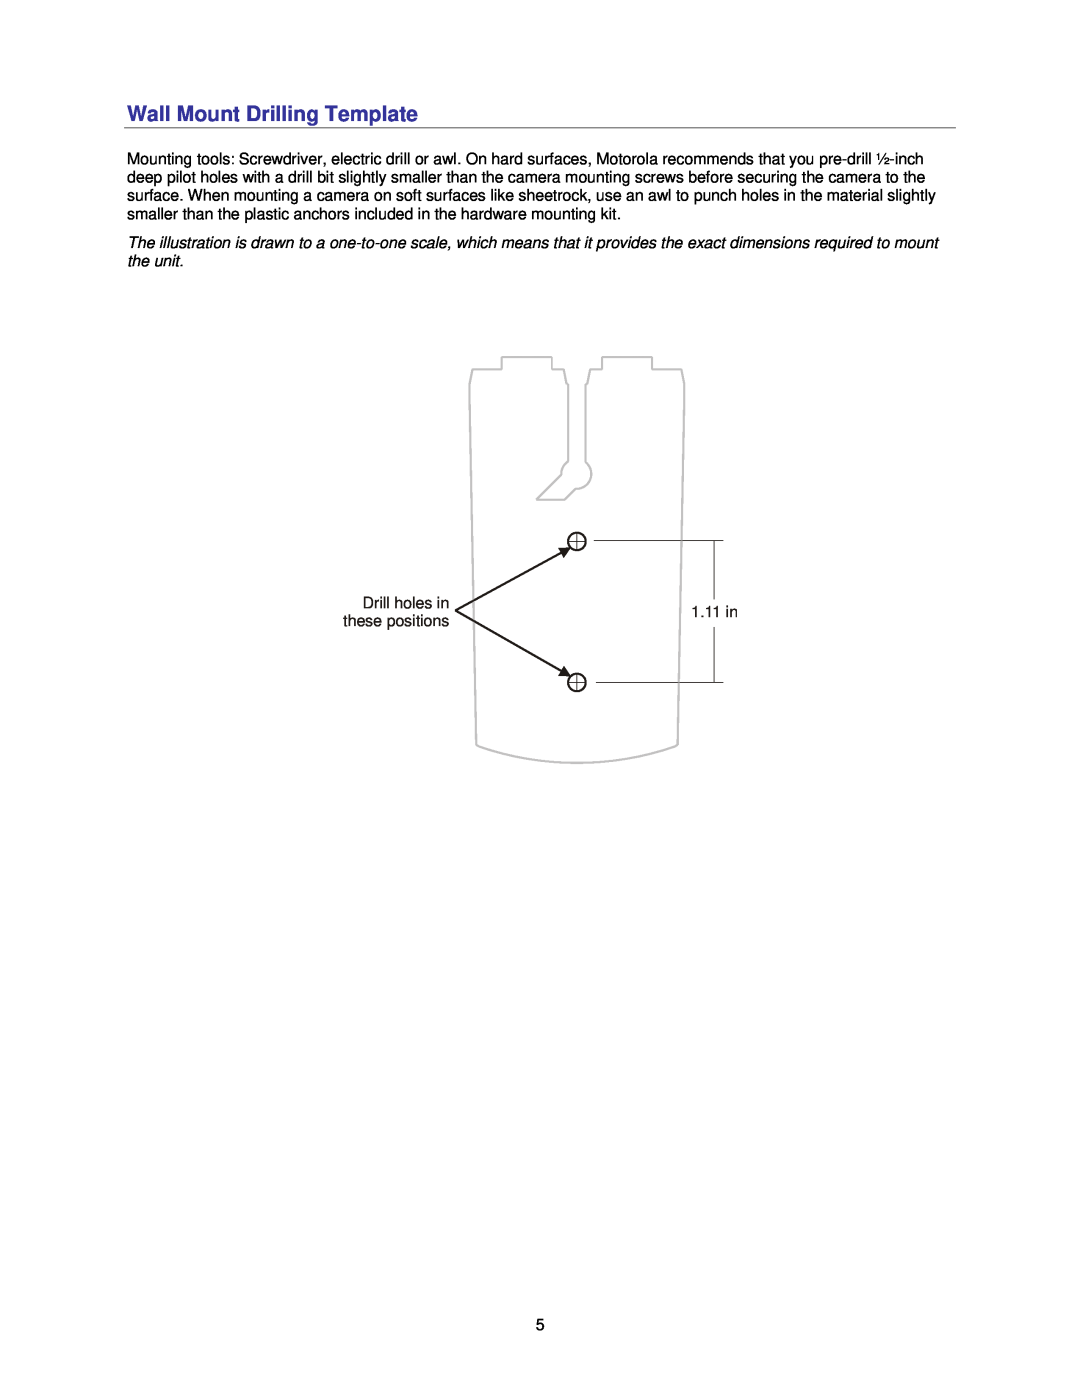 Motorola HMVC3050 manual Wall Mount Drilling Template, Drill holes in 